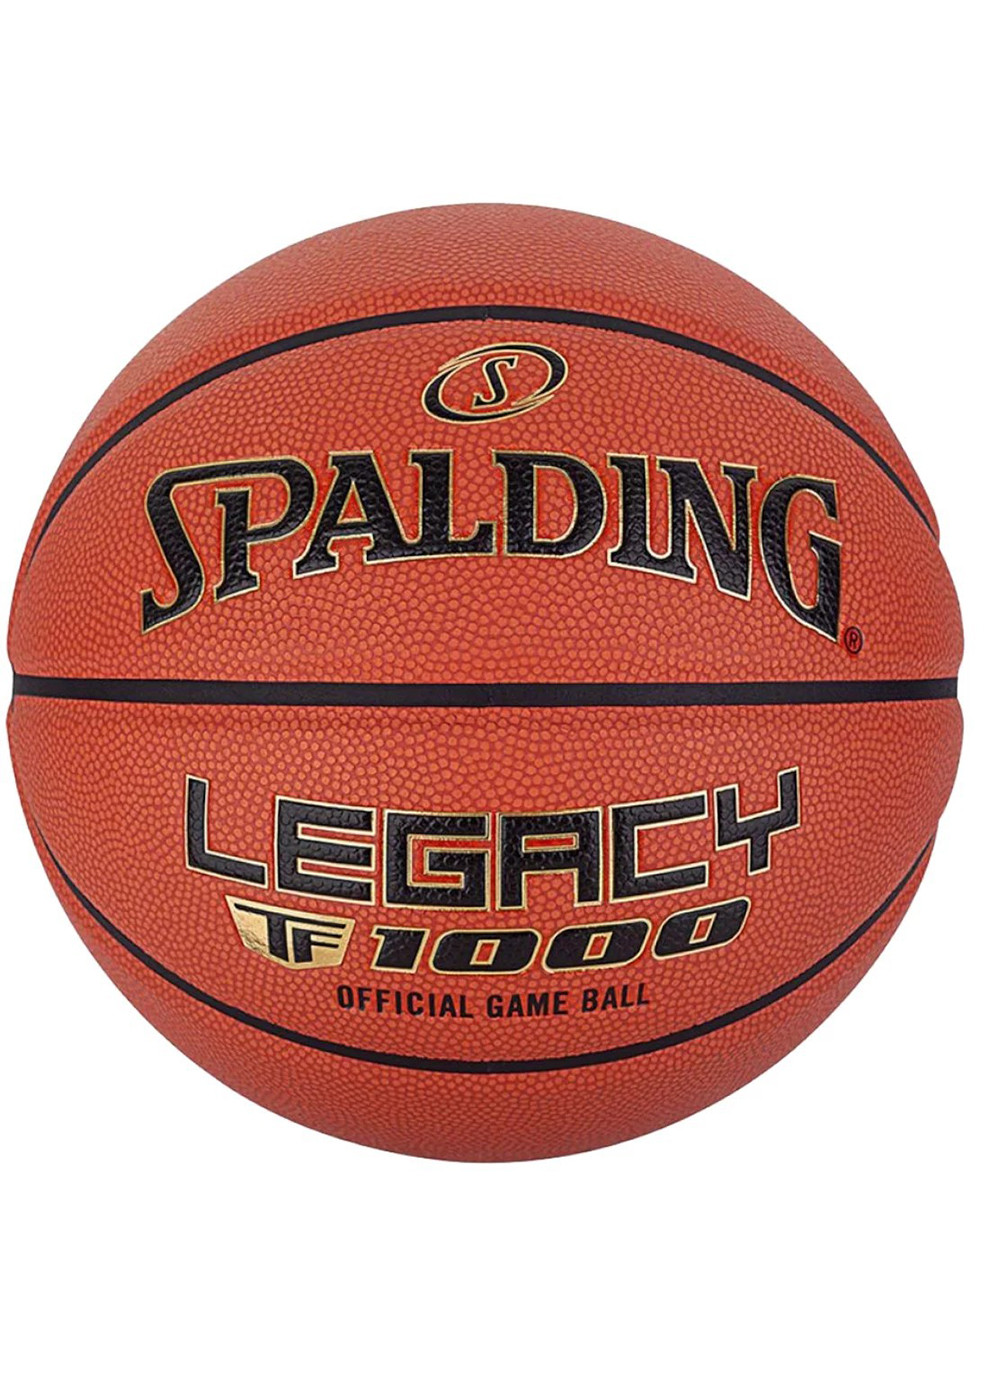 Баскетбольный Мяч TF-1000 Legacy FIBA оранжевый Уни Spalding (260646269)